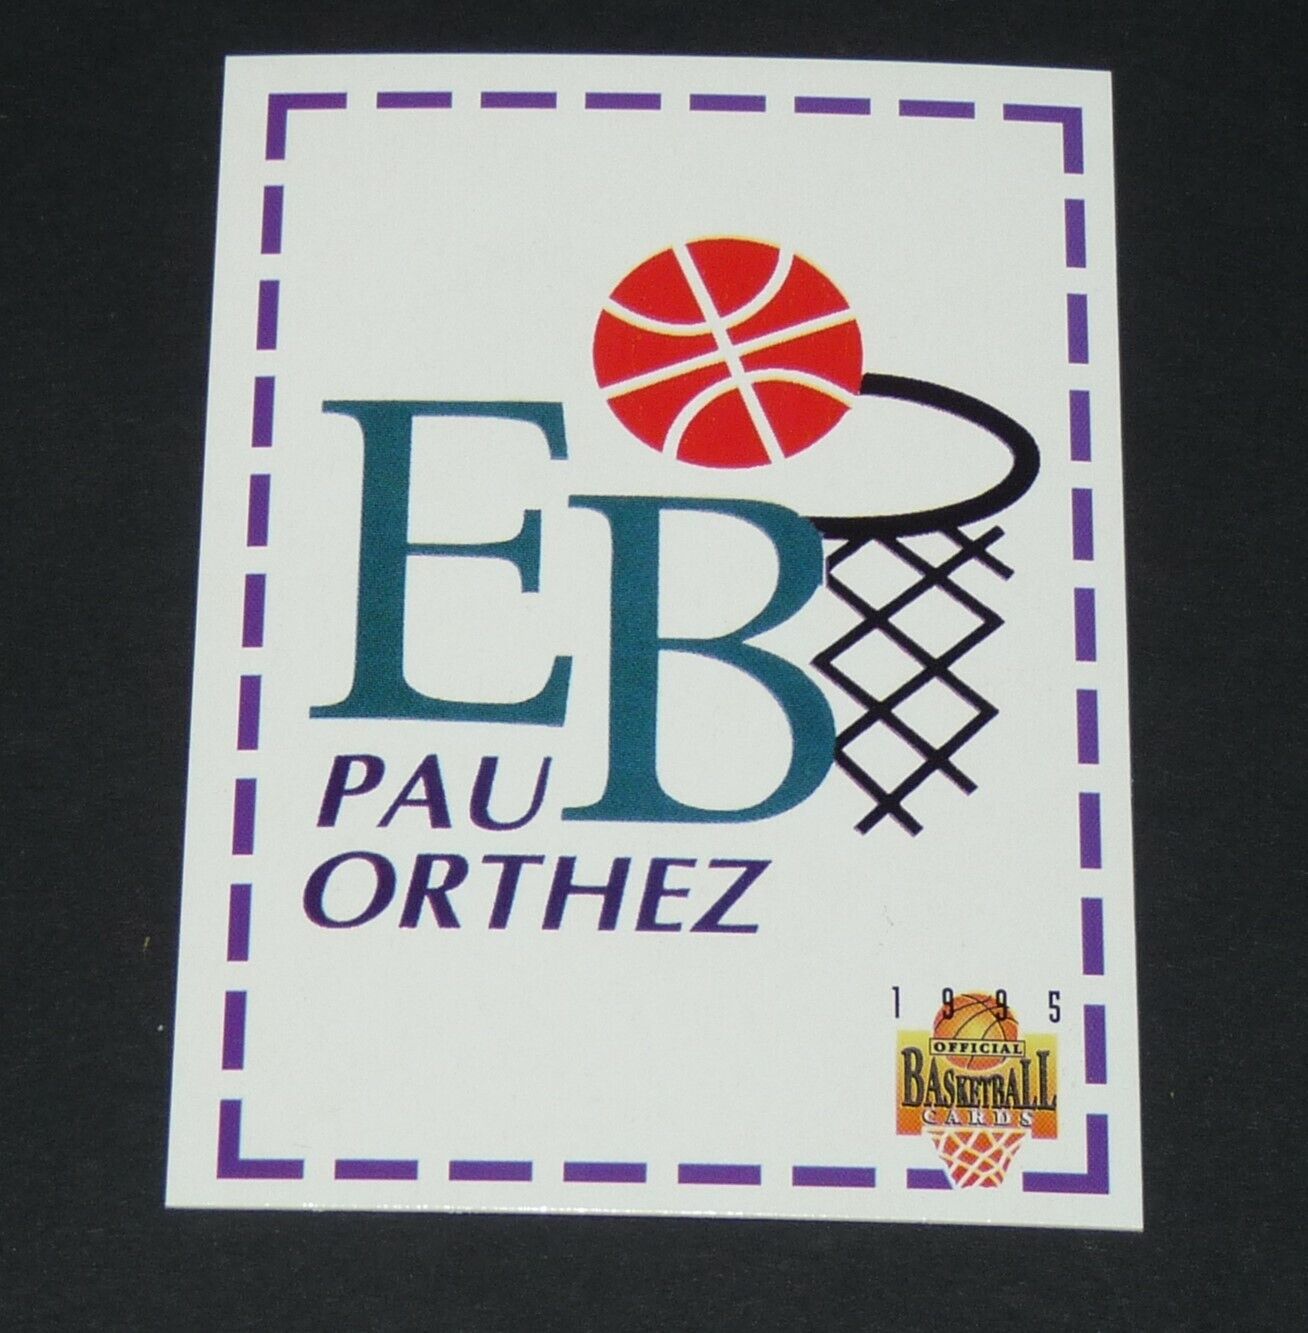 1995 EB PAU ORTHEZ BASKETBALL FRANCE PANINI CARD